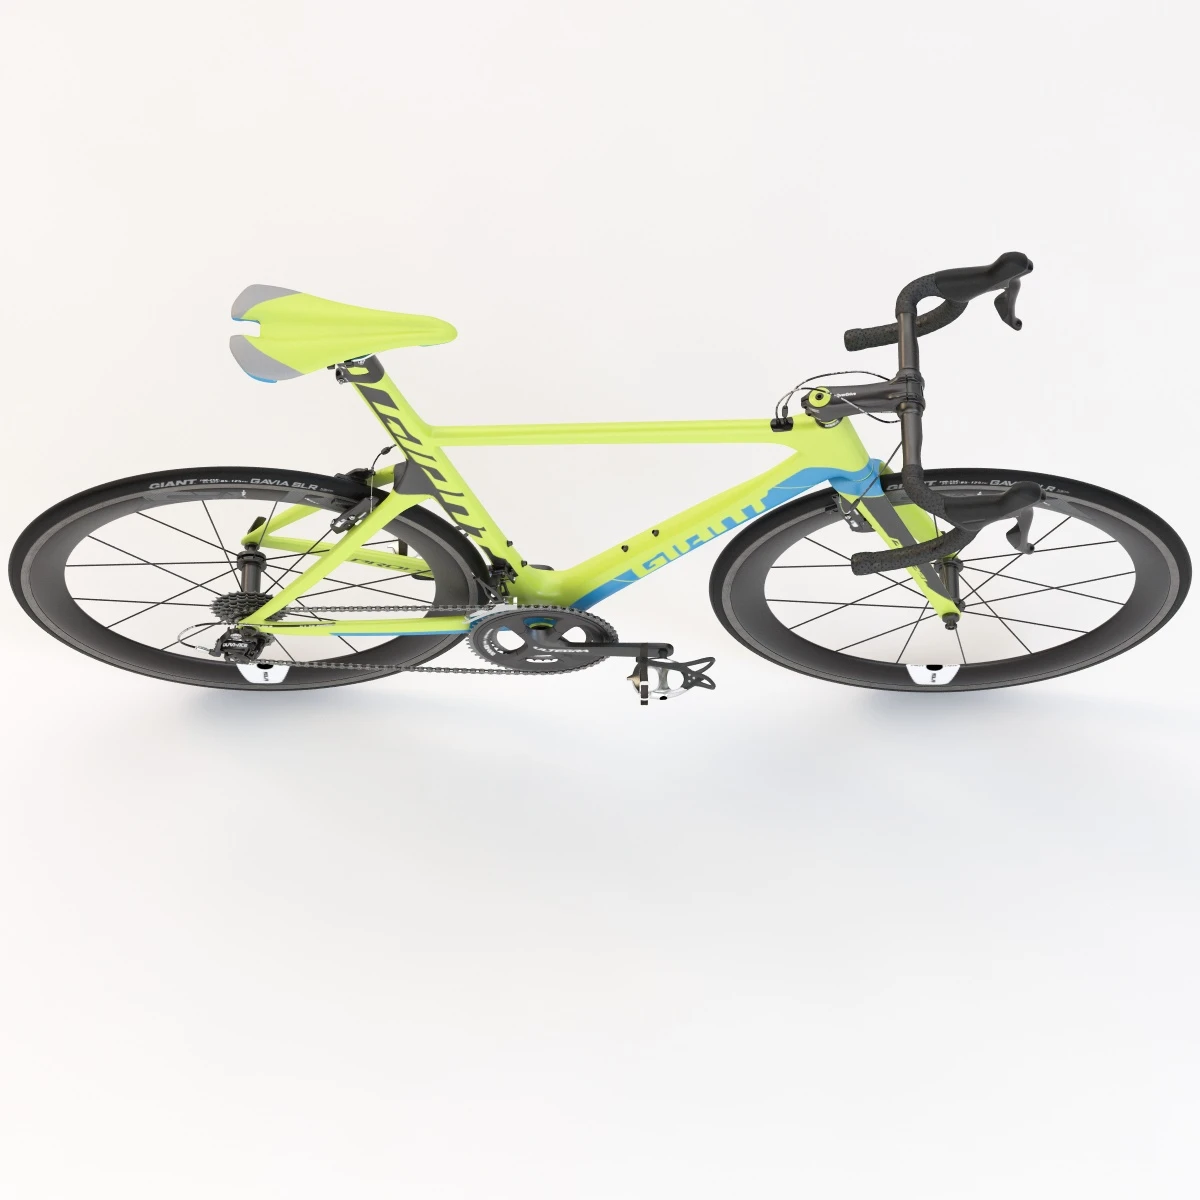 Giant Propel Advanced Sl-2 Green-Blue Lightweight Sprinter Bicycle 3D Model_06